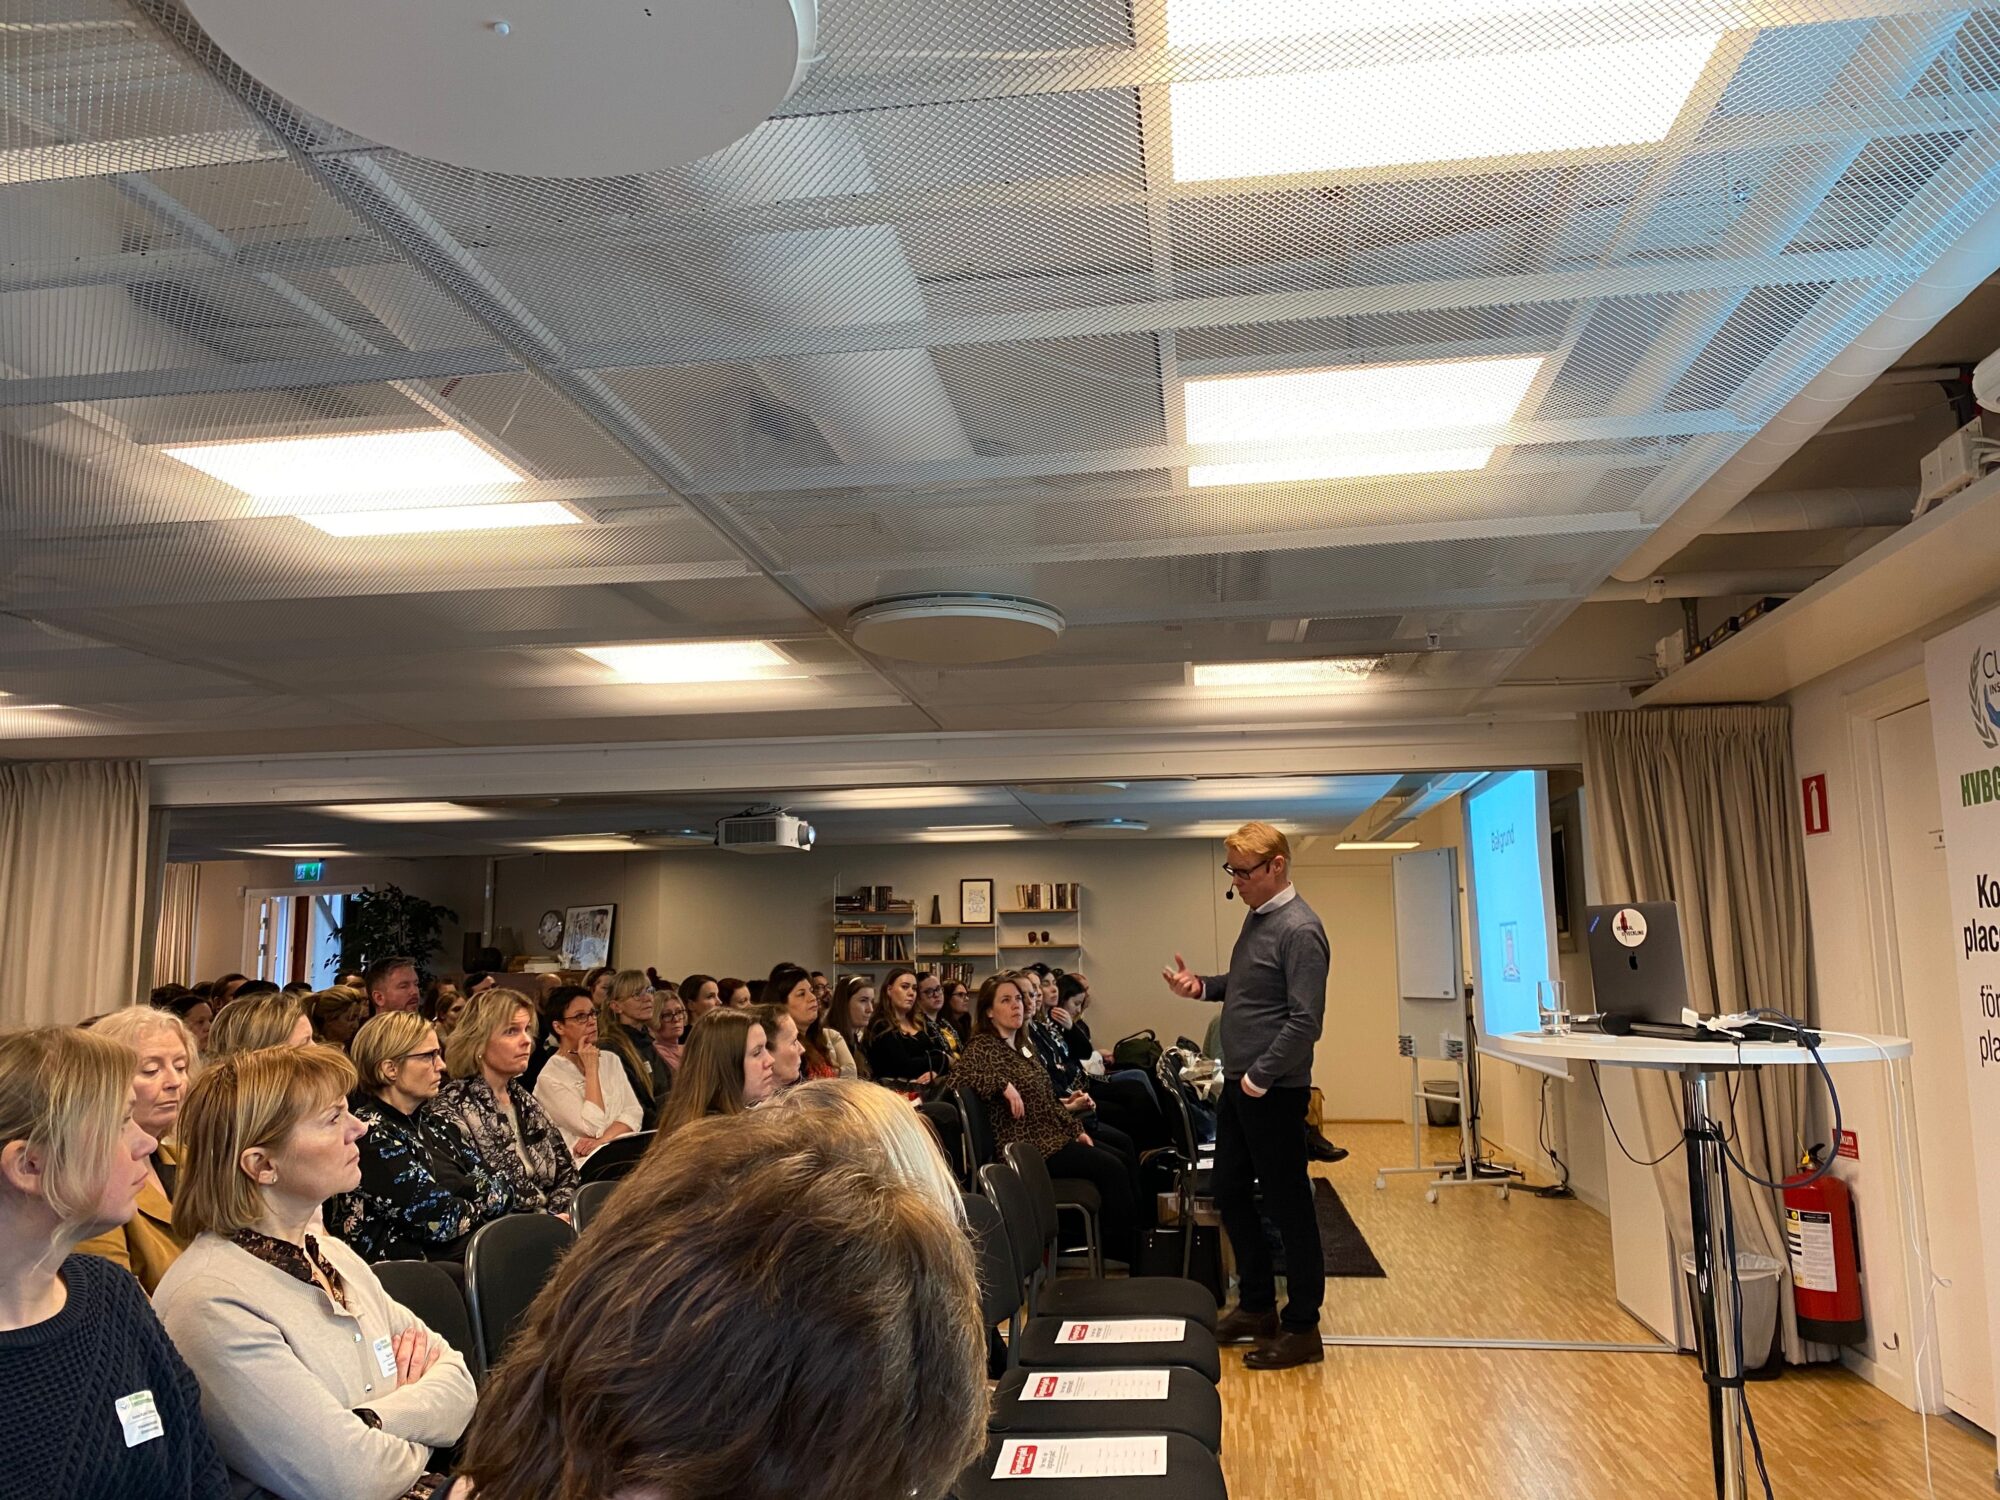 Robert, founder of Vertikal Utveckling (Vertical Development) during a presentation standing in front of an audience